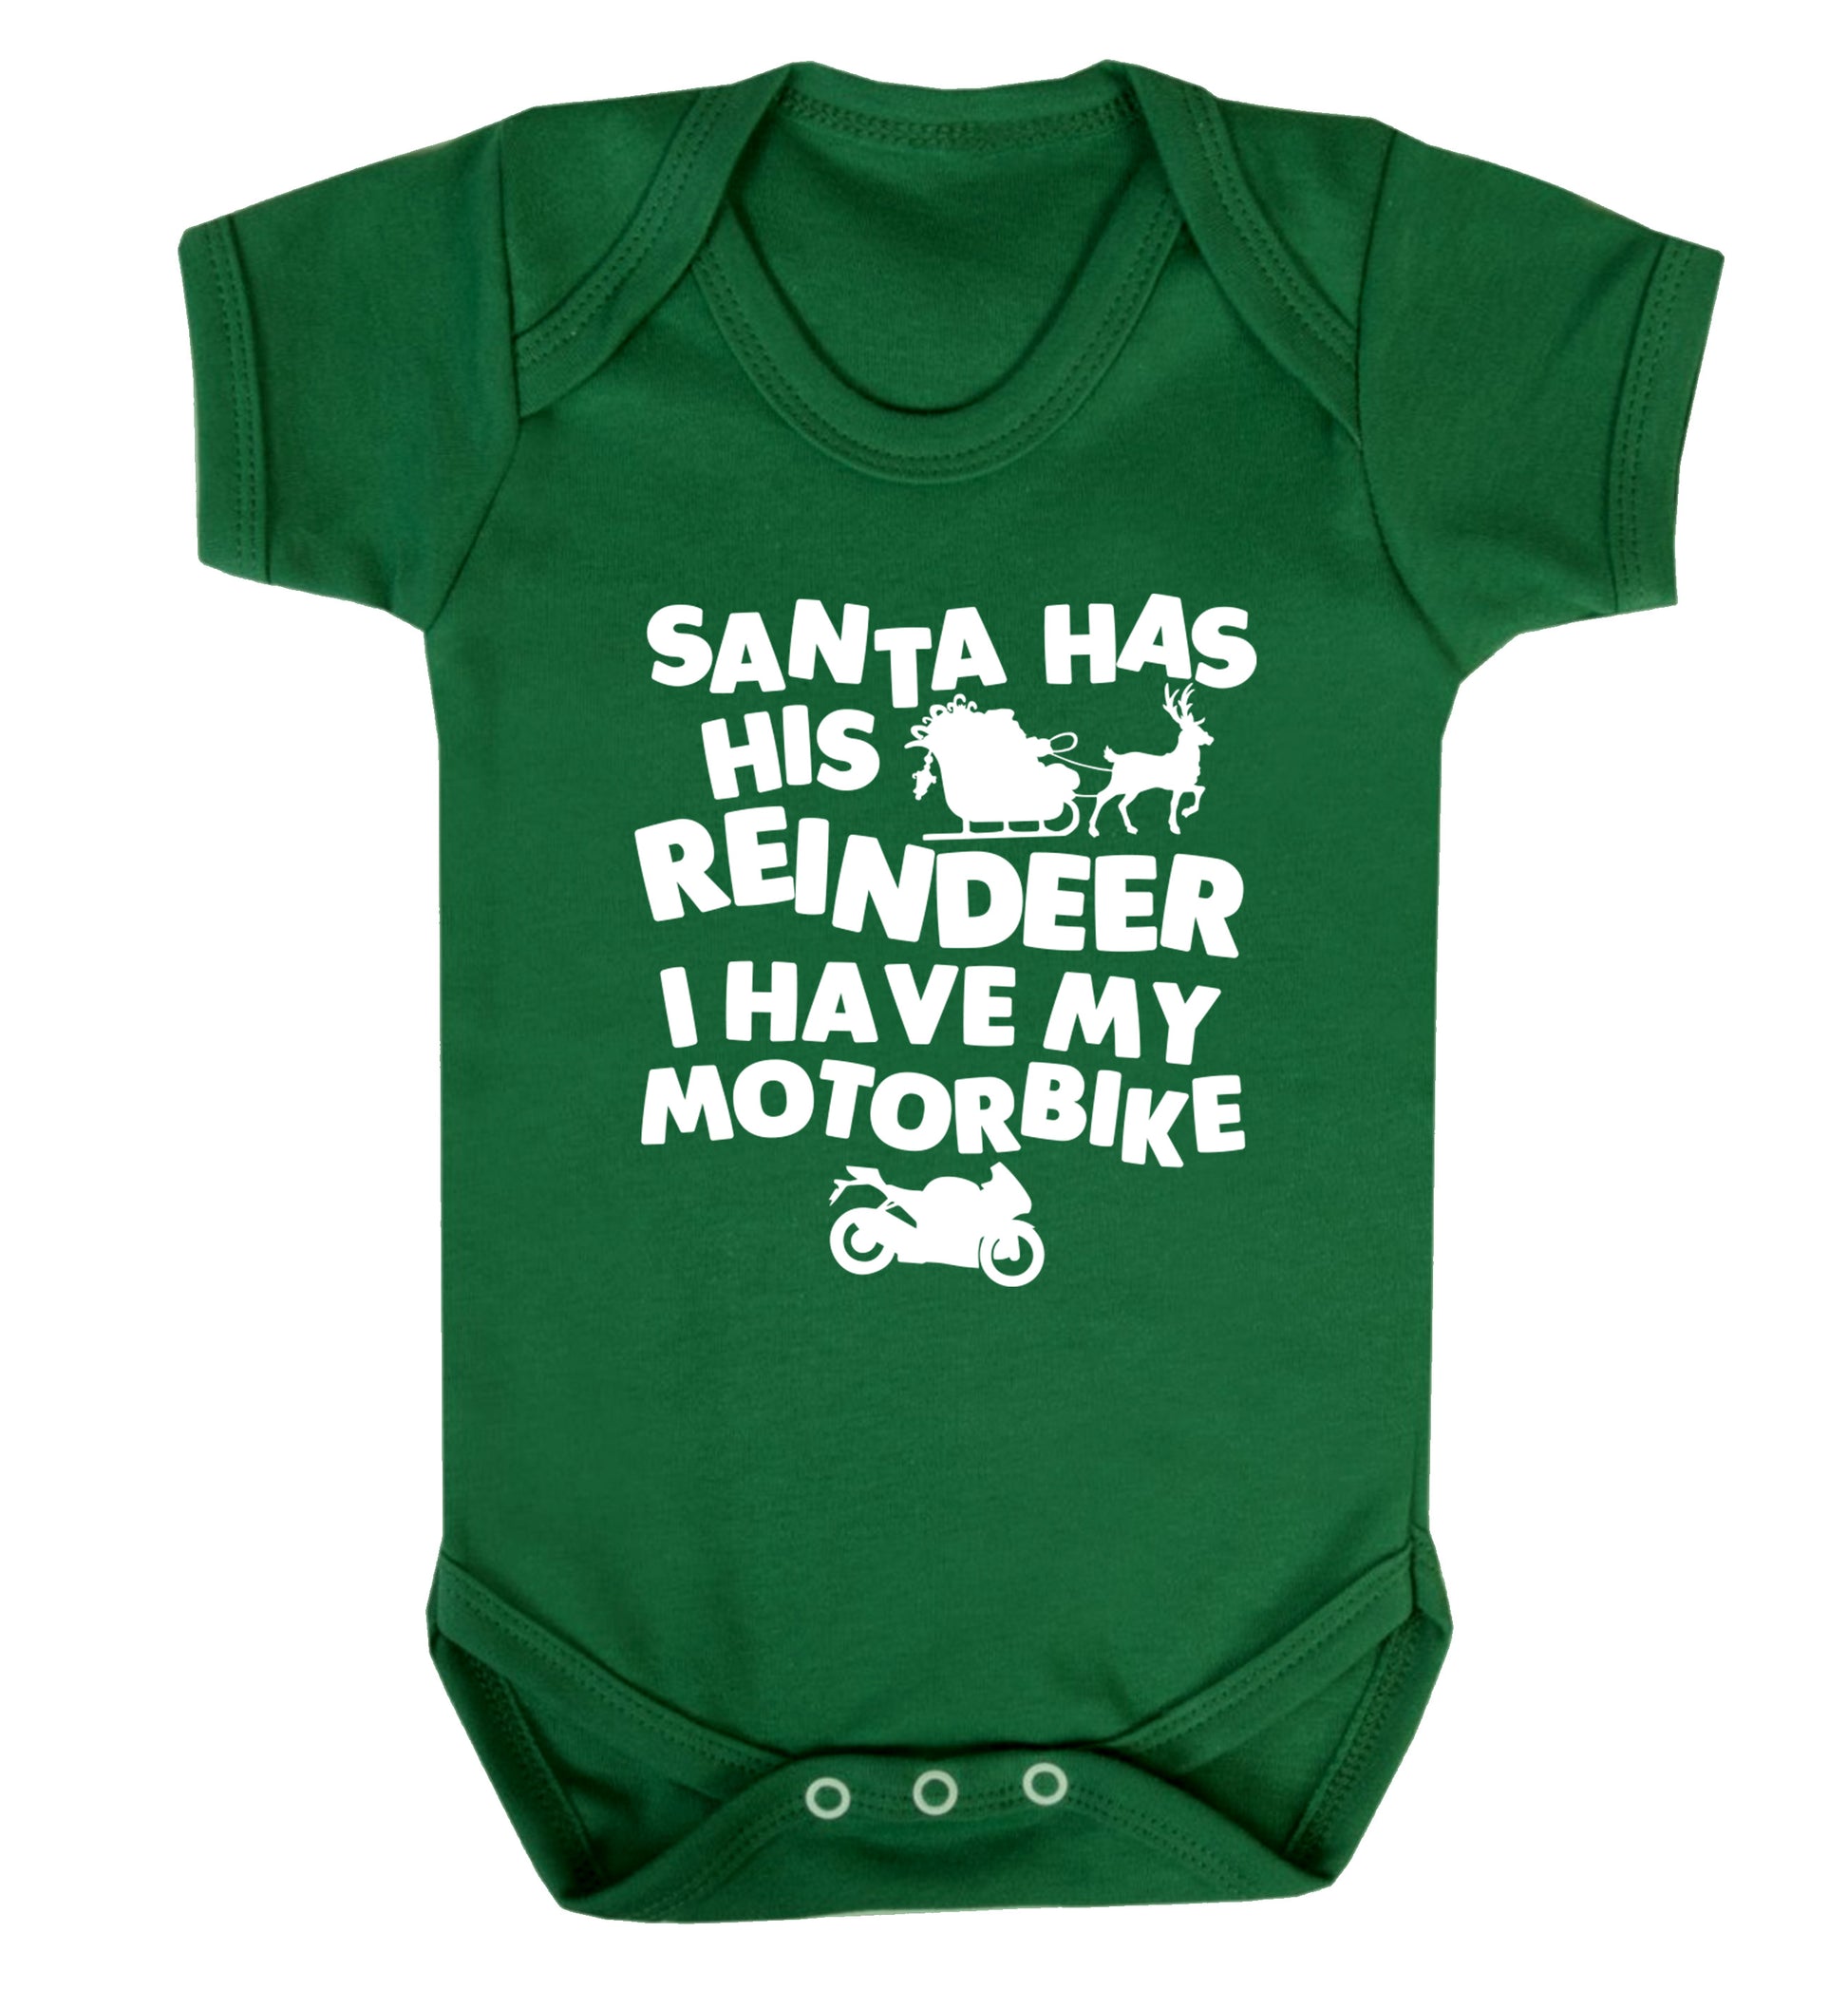 Santa has his reindeer I have my motorbike Baby Vest green 18-24 months